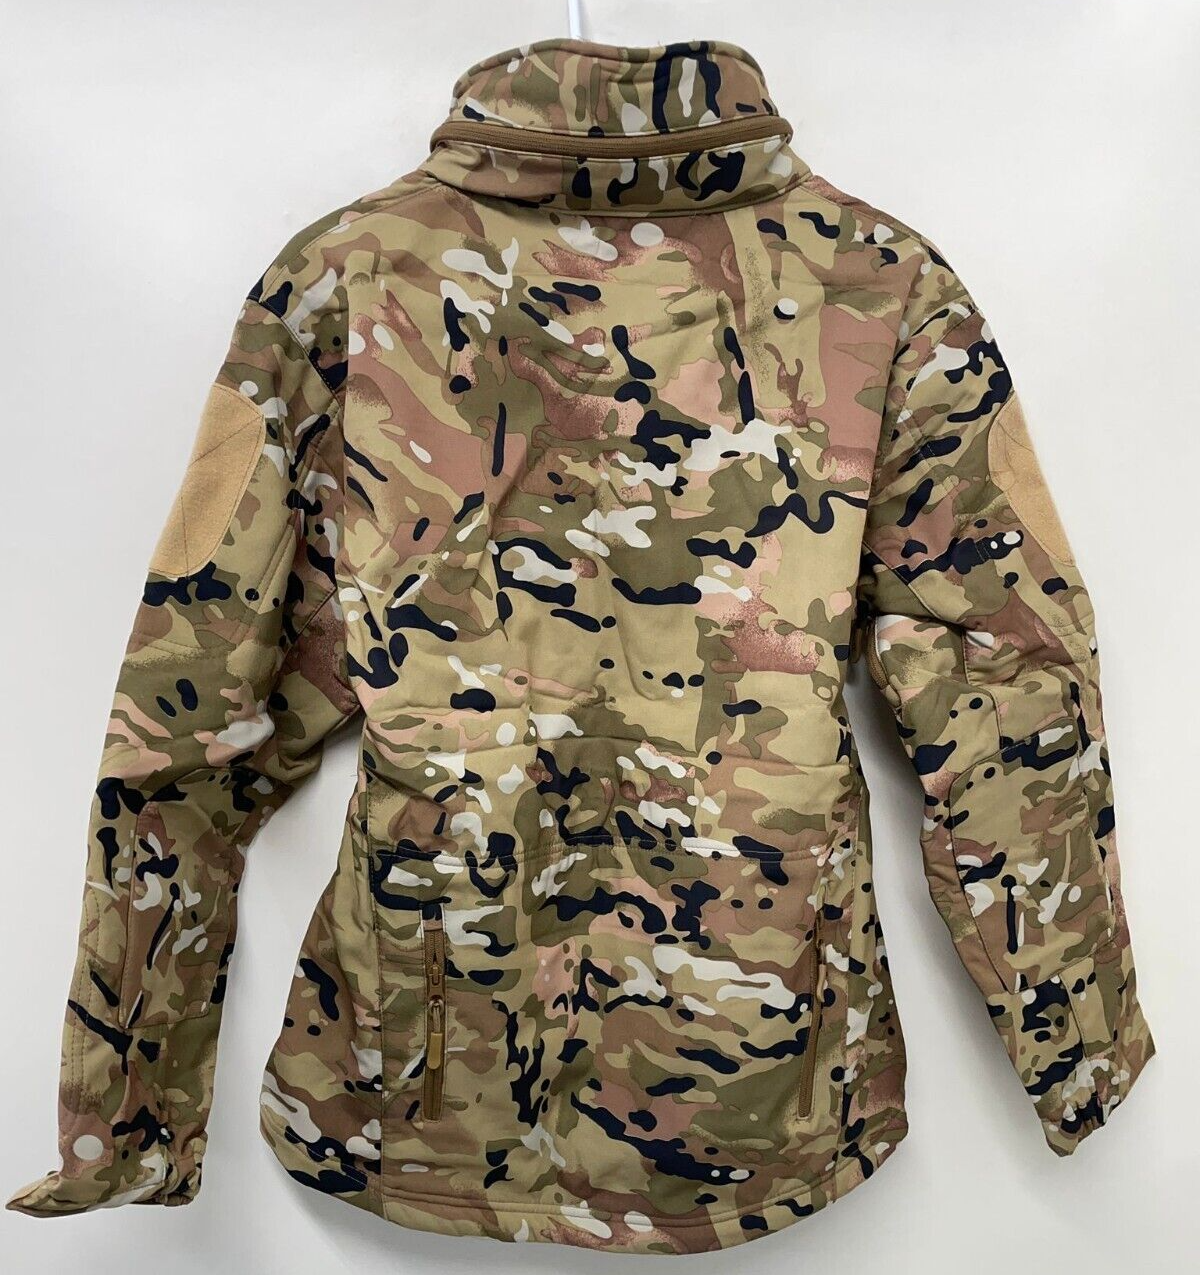 Mens Shark Skin Soft Shell Military Tactical Zip Jacket Fleece Lined Camo Hunt